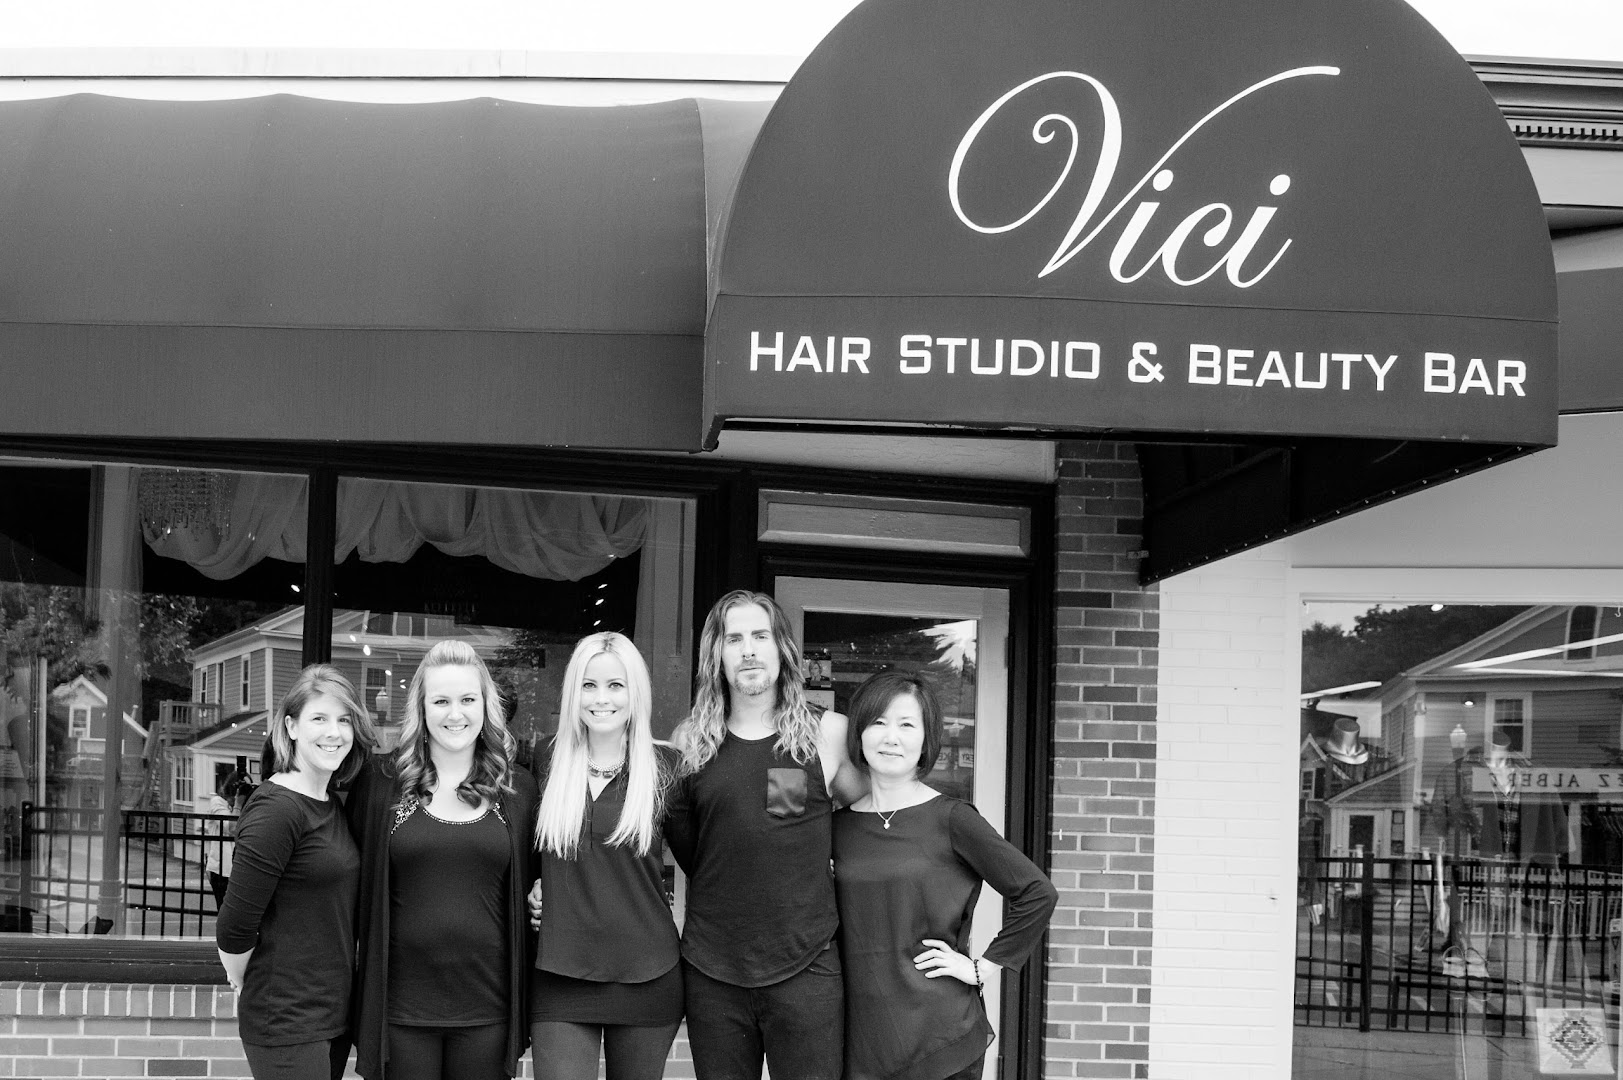 Vici Hair Studio & Beauty Bar